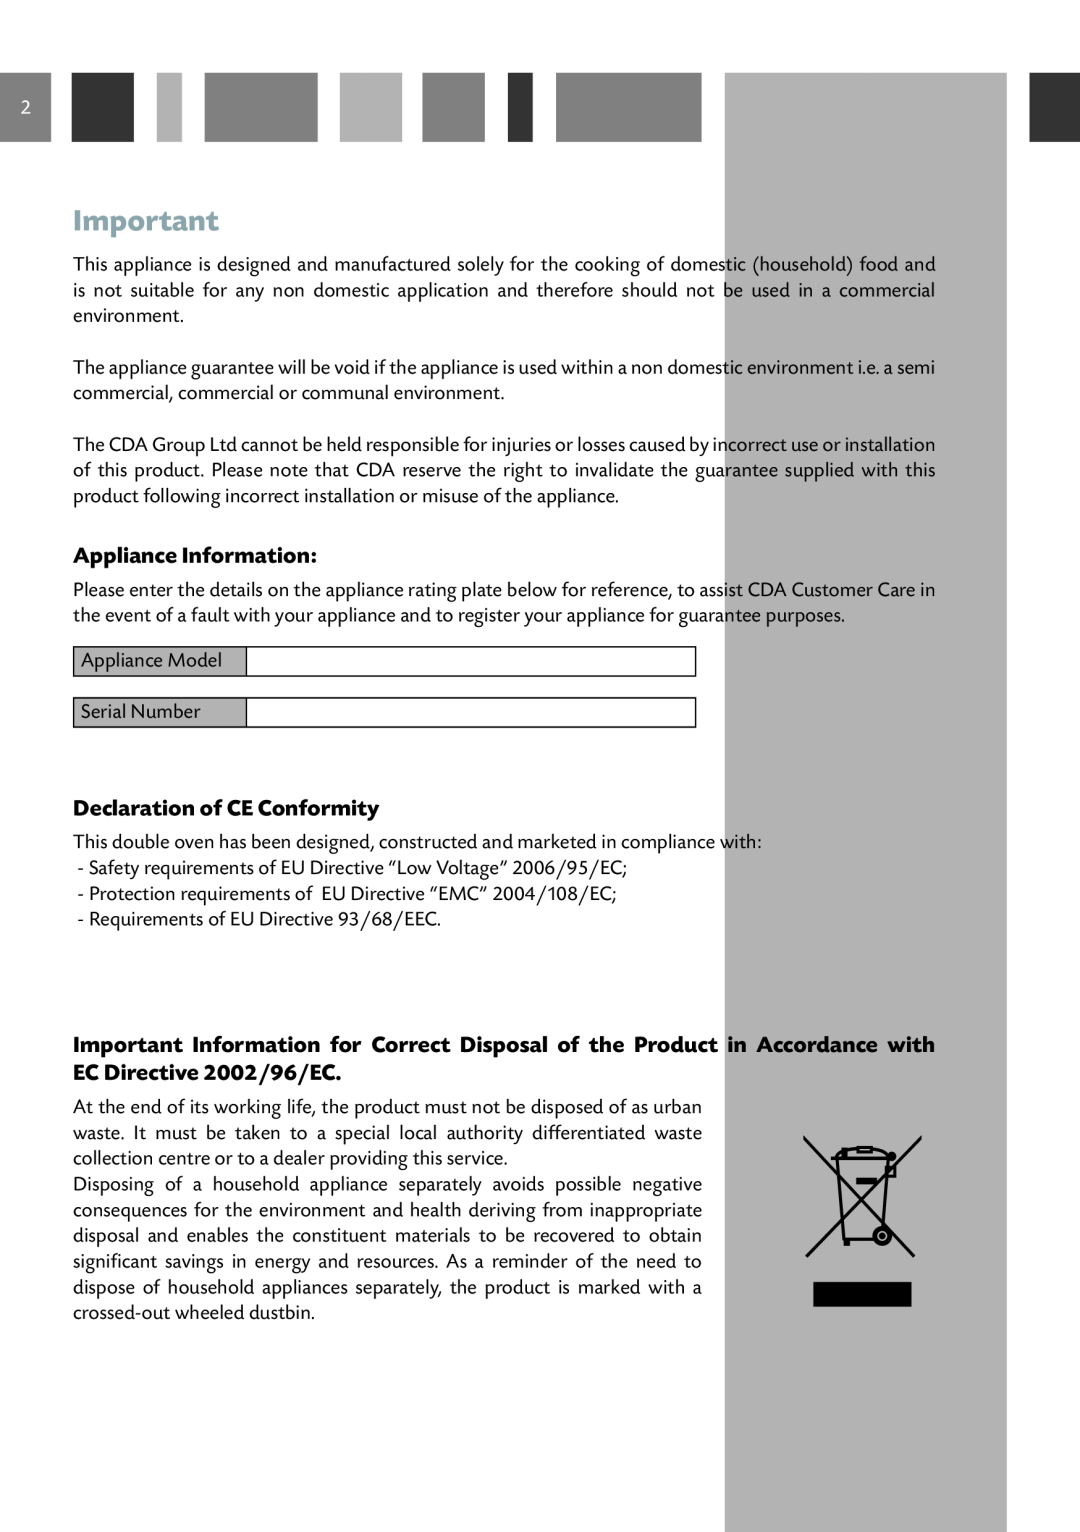 CDA DC730 manual Appliance Information, Declaration of CE Conformity 